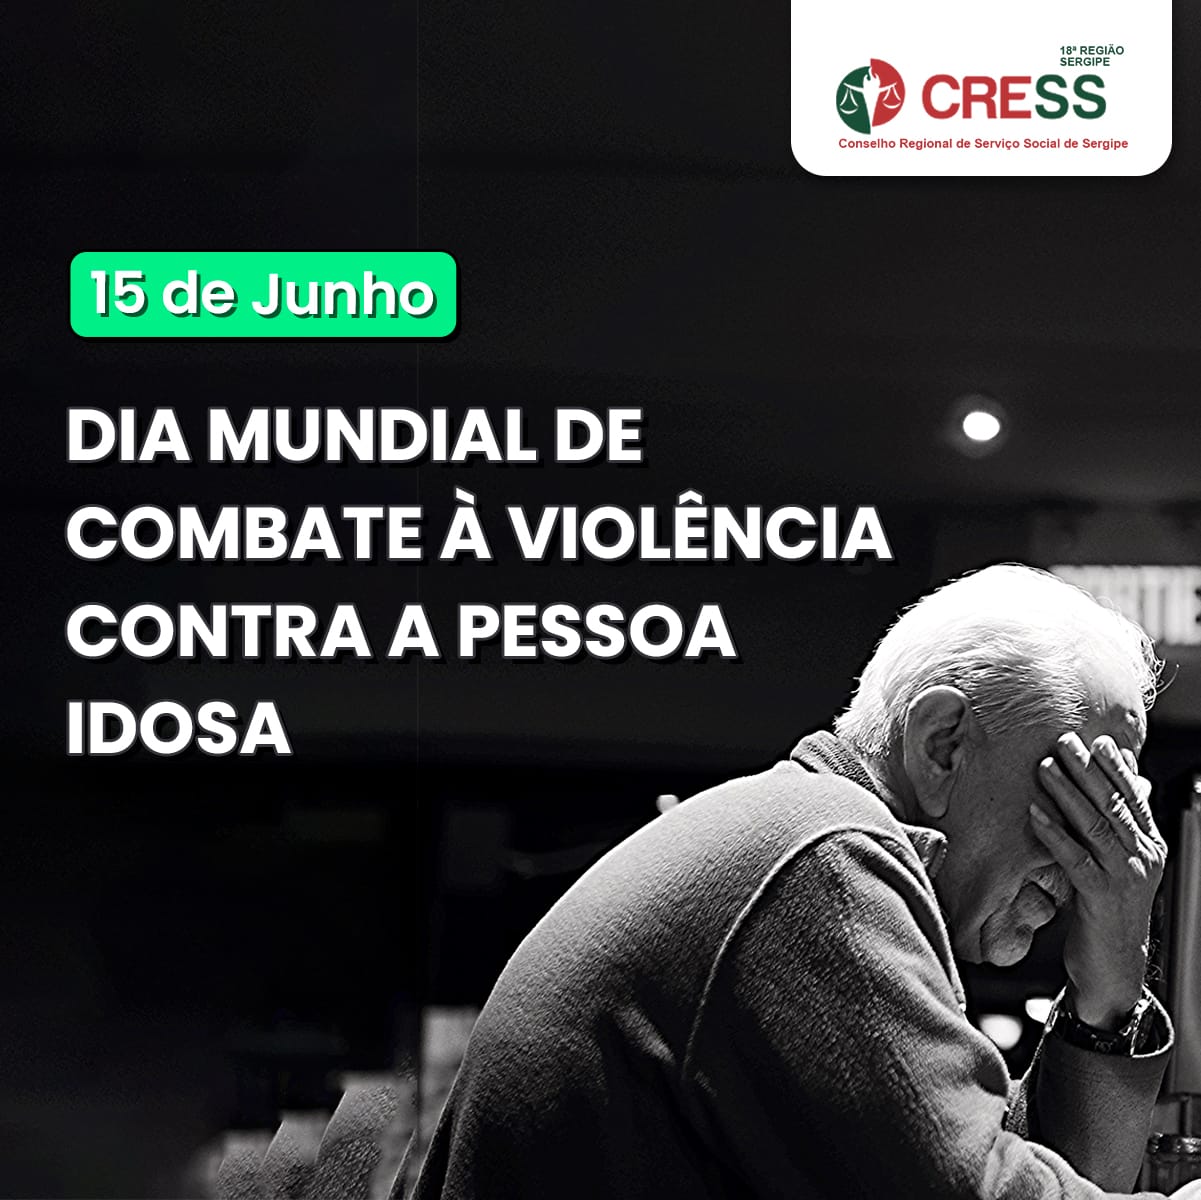 CRESS-SE reafirma compromisso no combate à violência contra a pessoa idosa